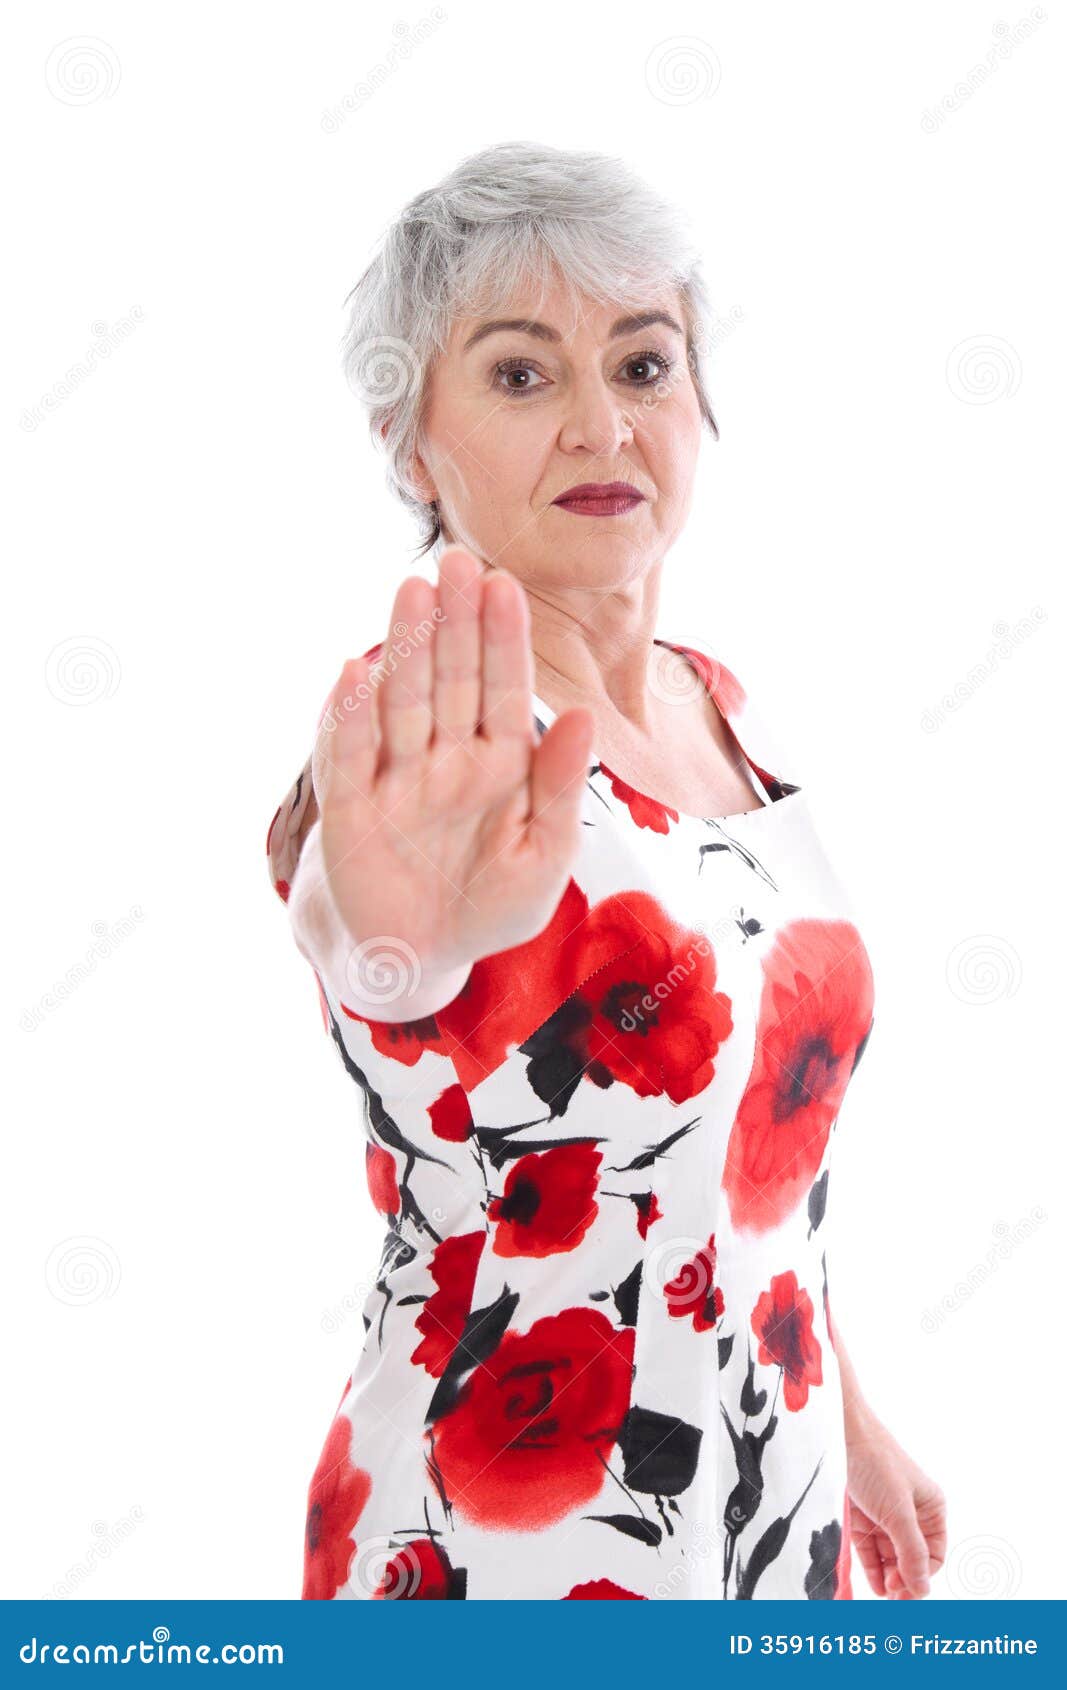 elderly woman fights back, gestures stop sign